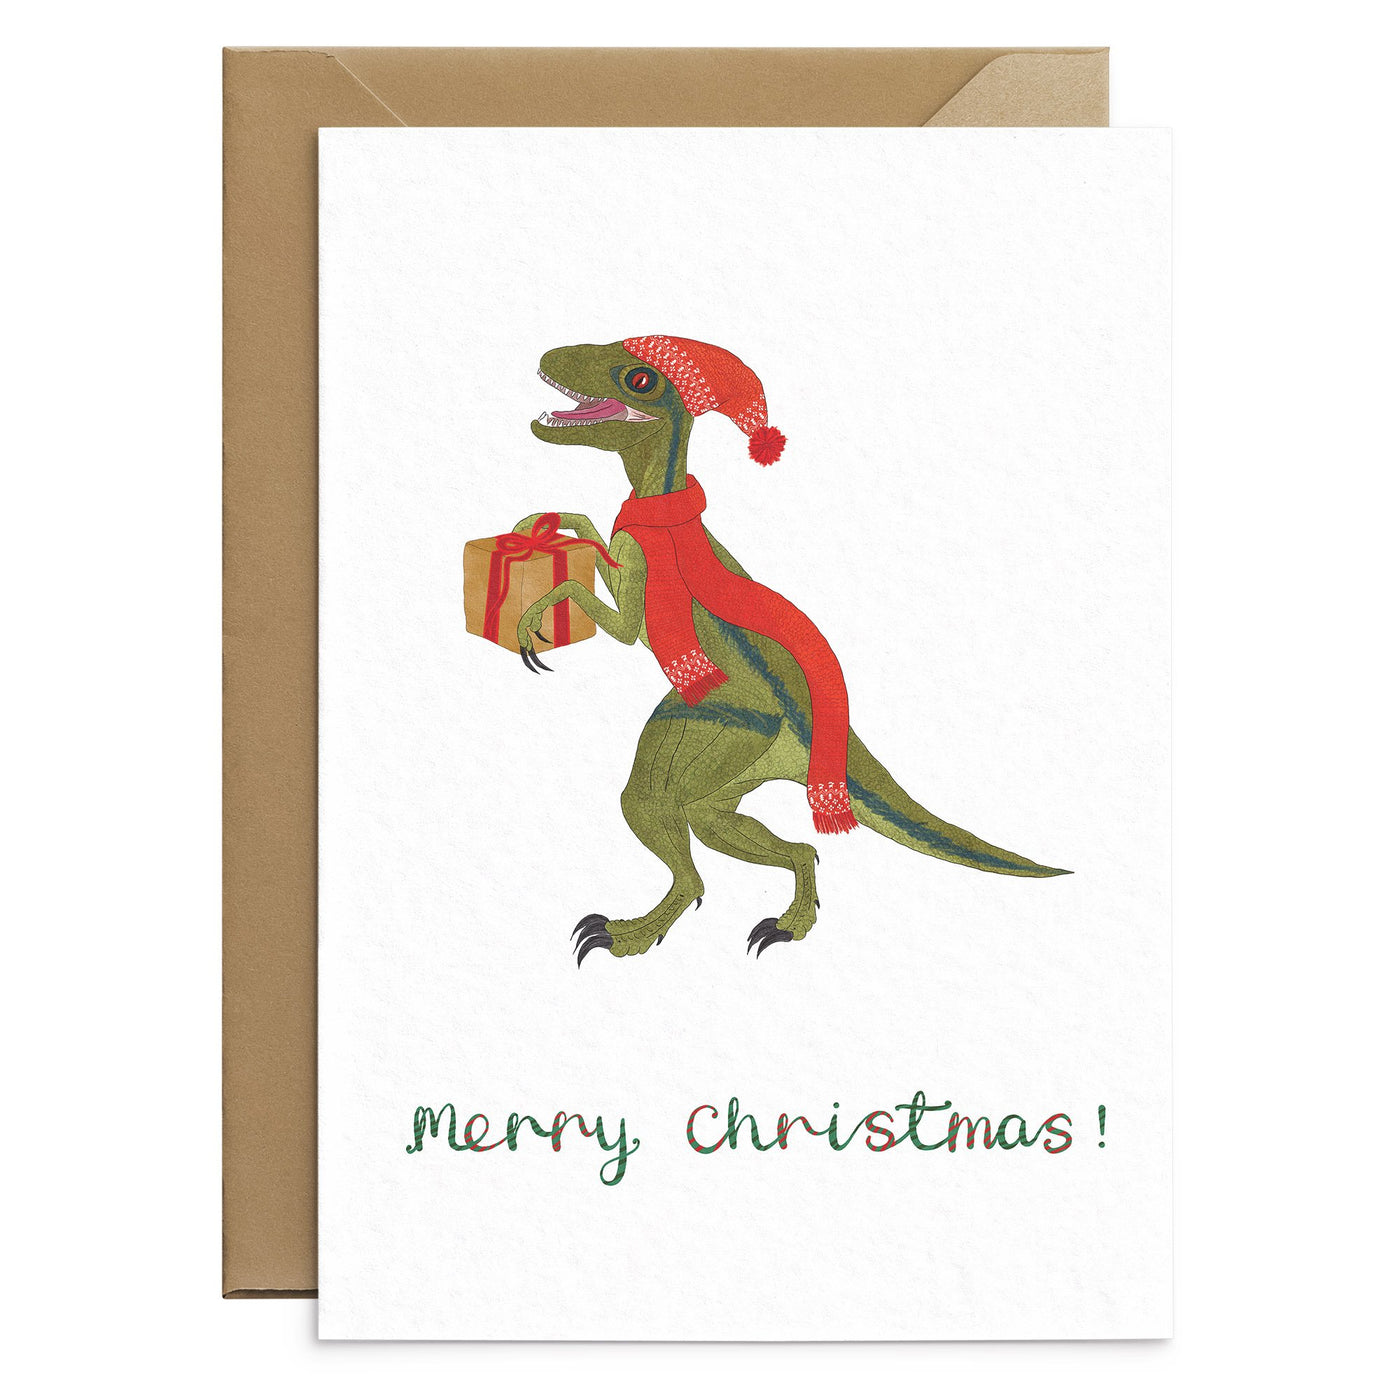 The Velociraptor Dinosaur Christmas Card - Poppins & Co.